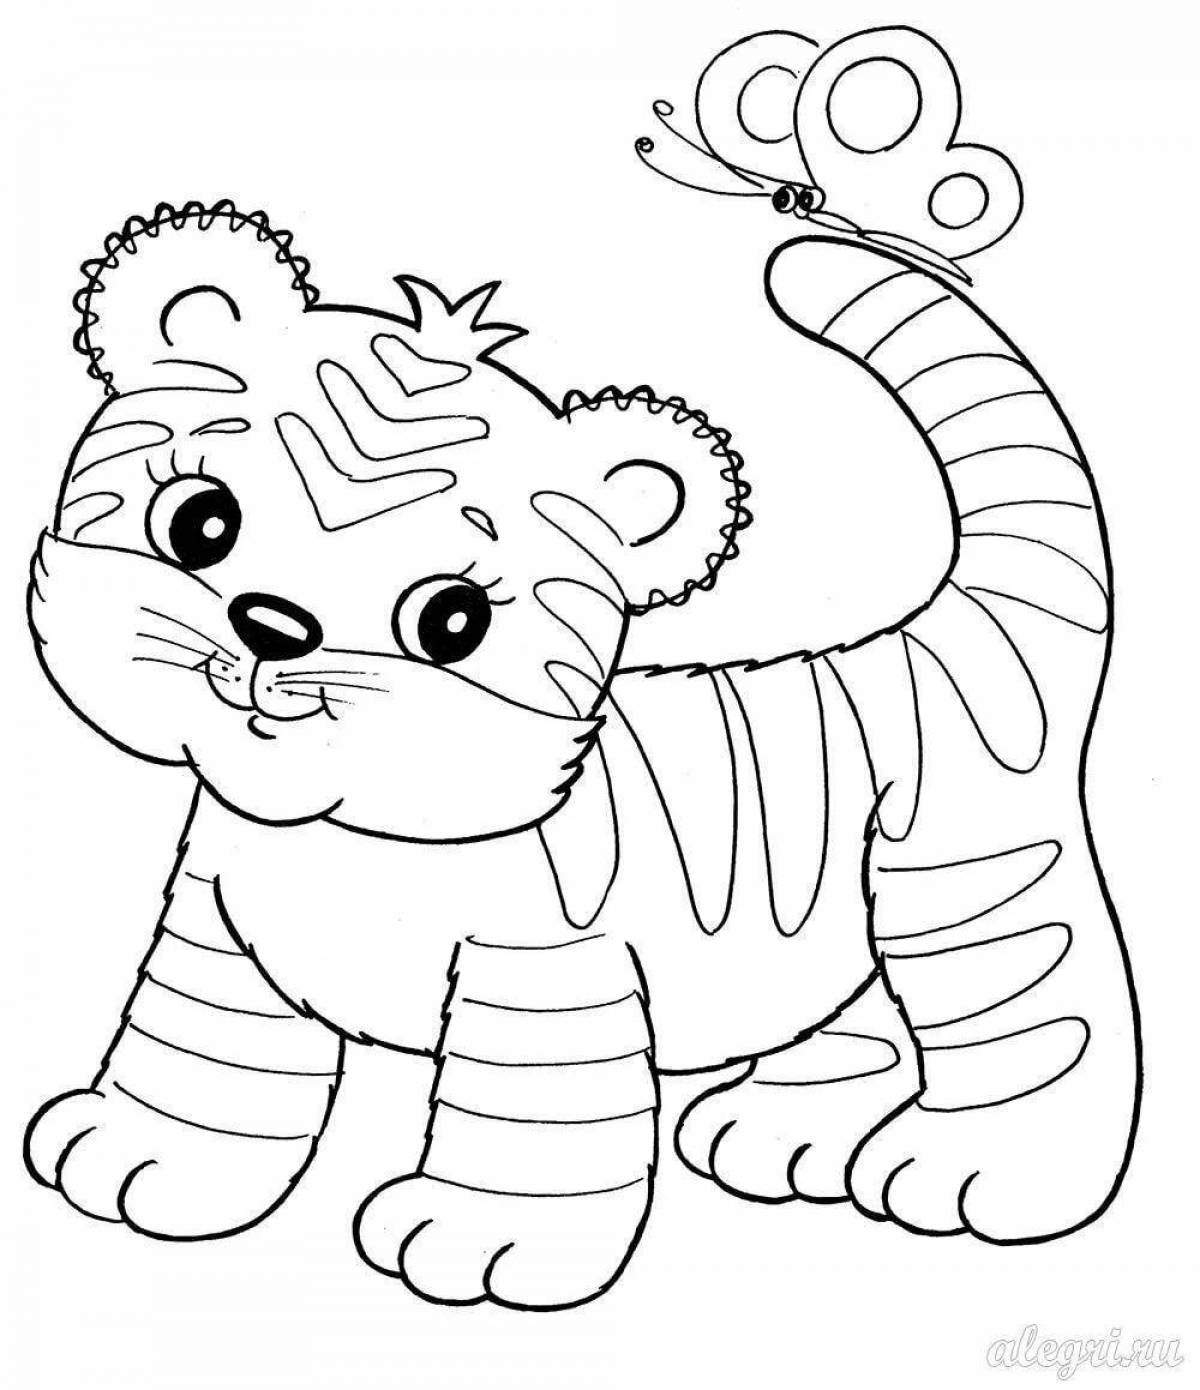 Tiger maintenance coloring page